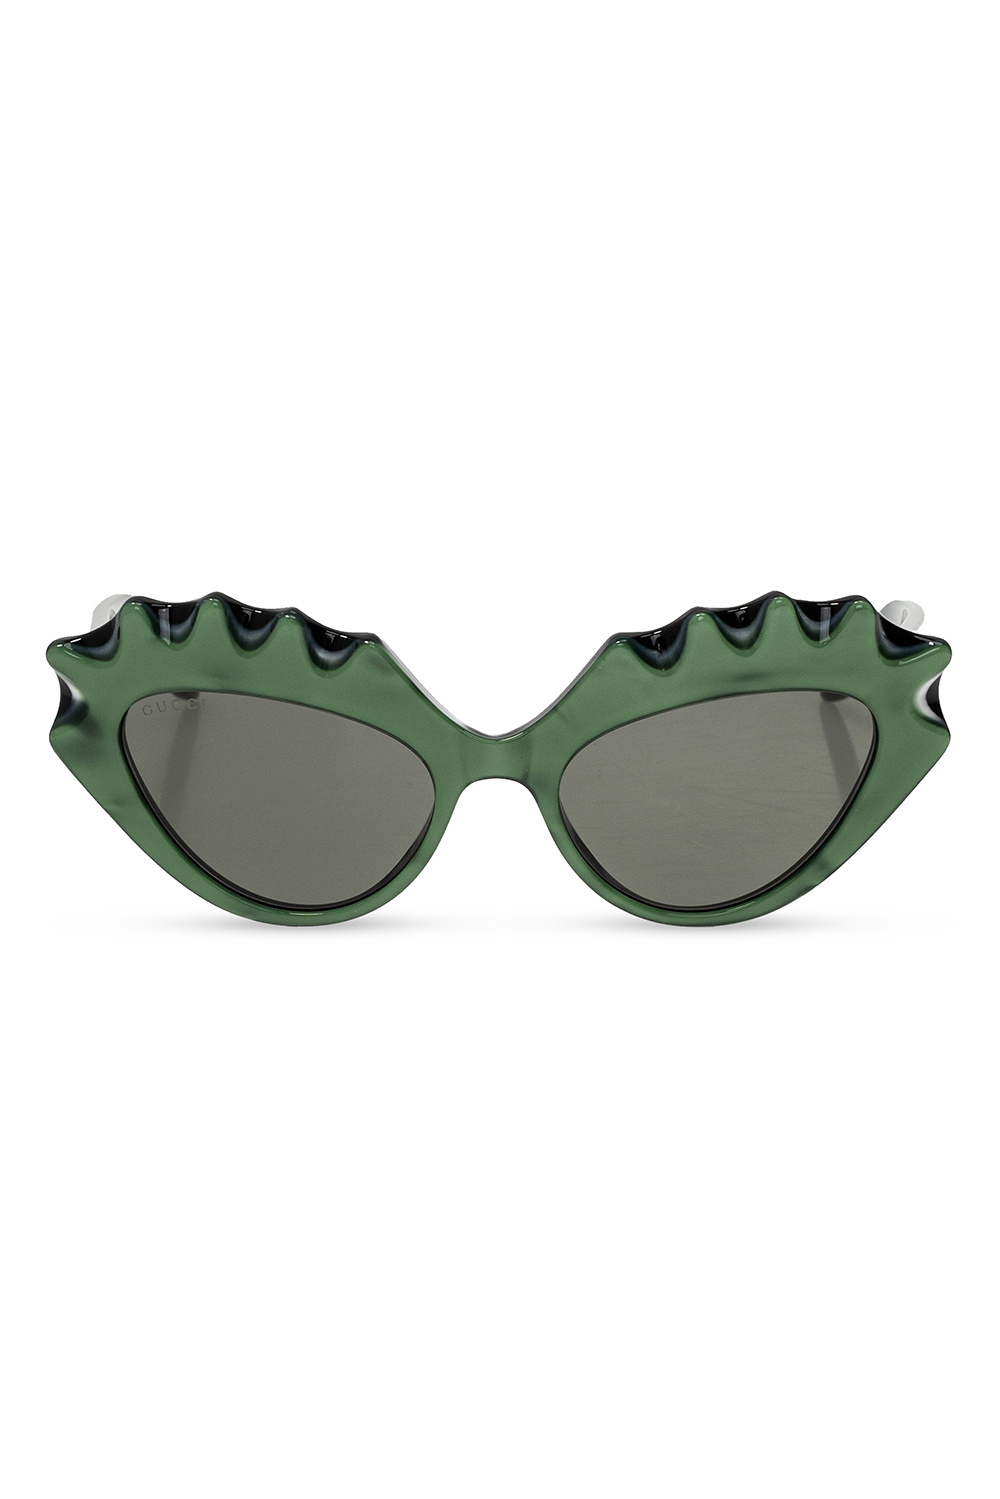 Gucci sunglasses aviator with logo